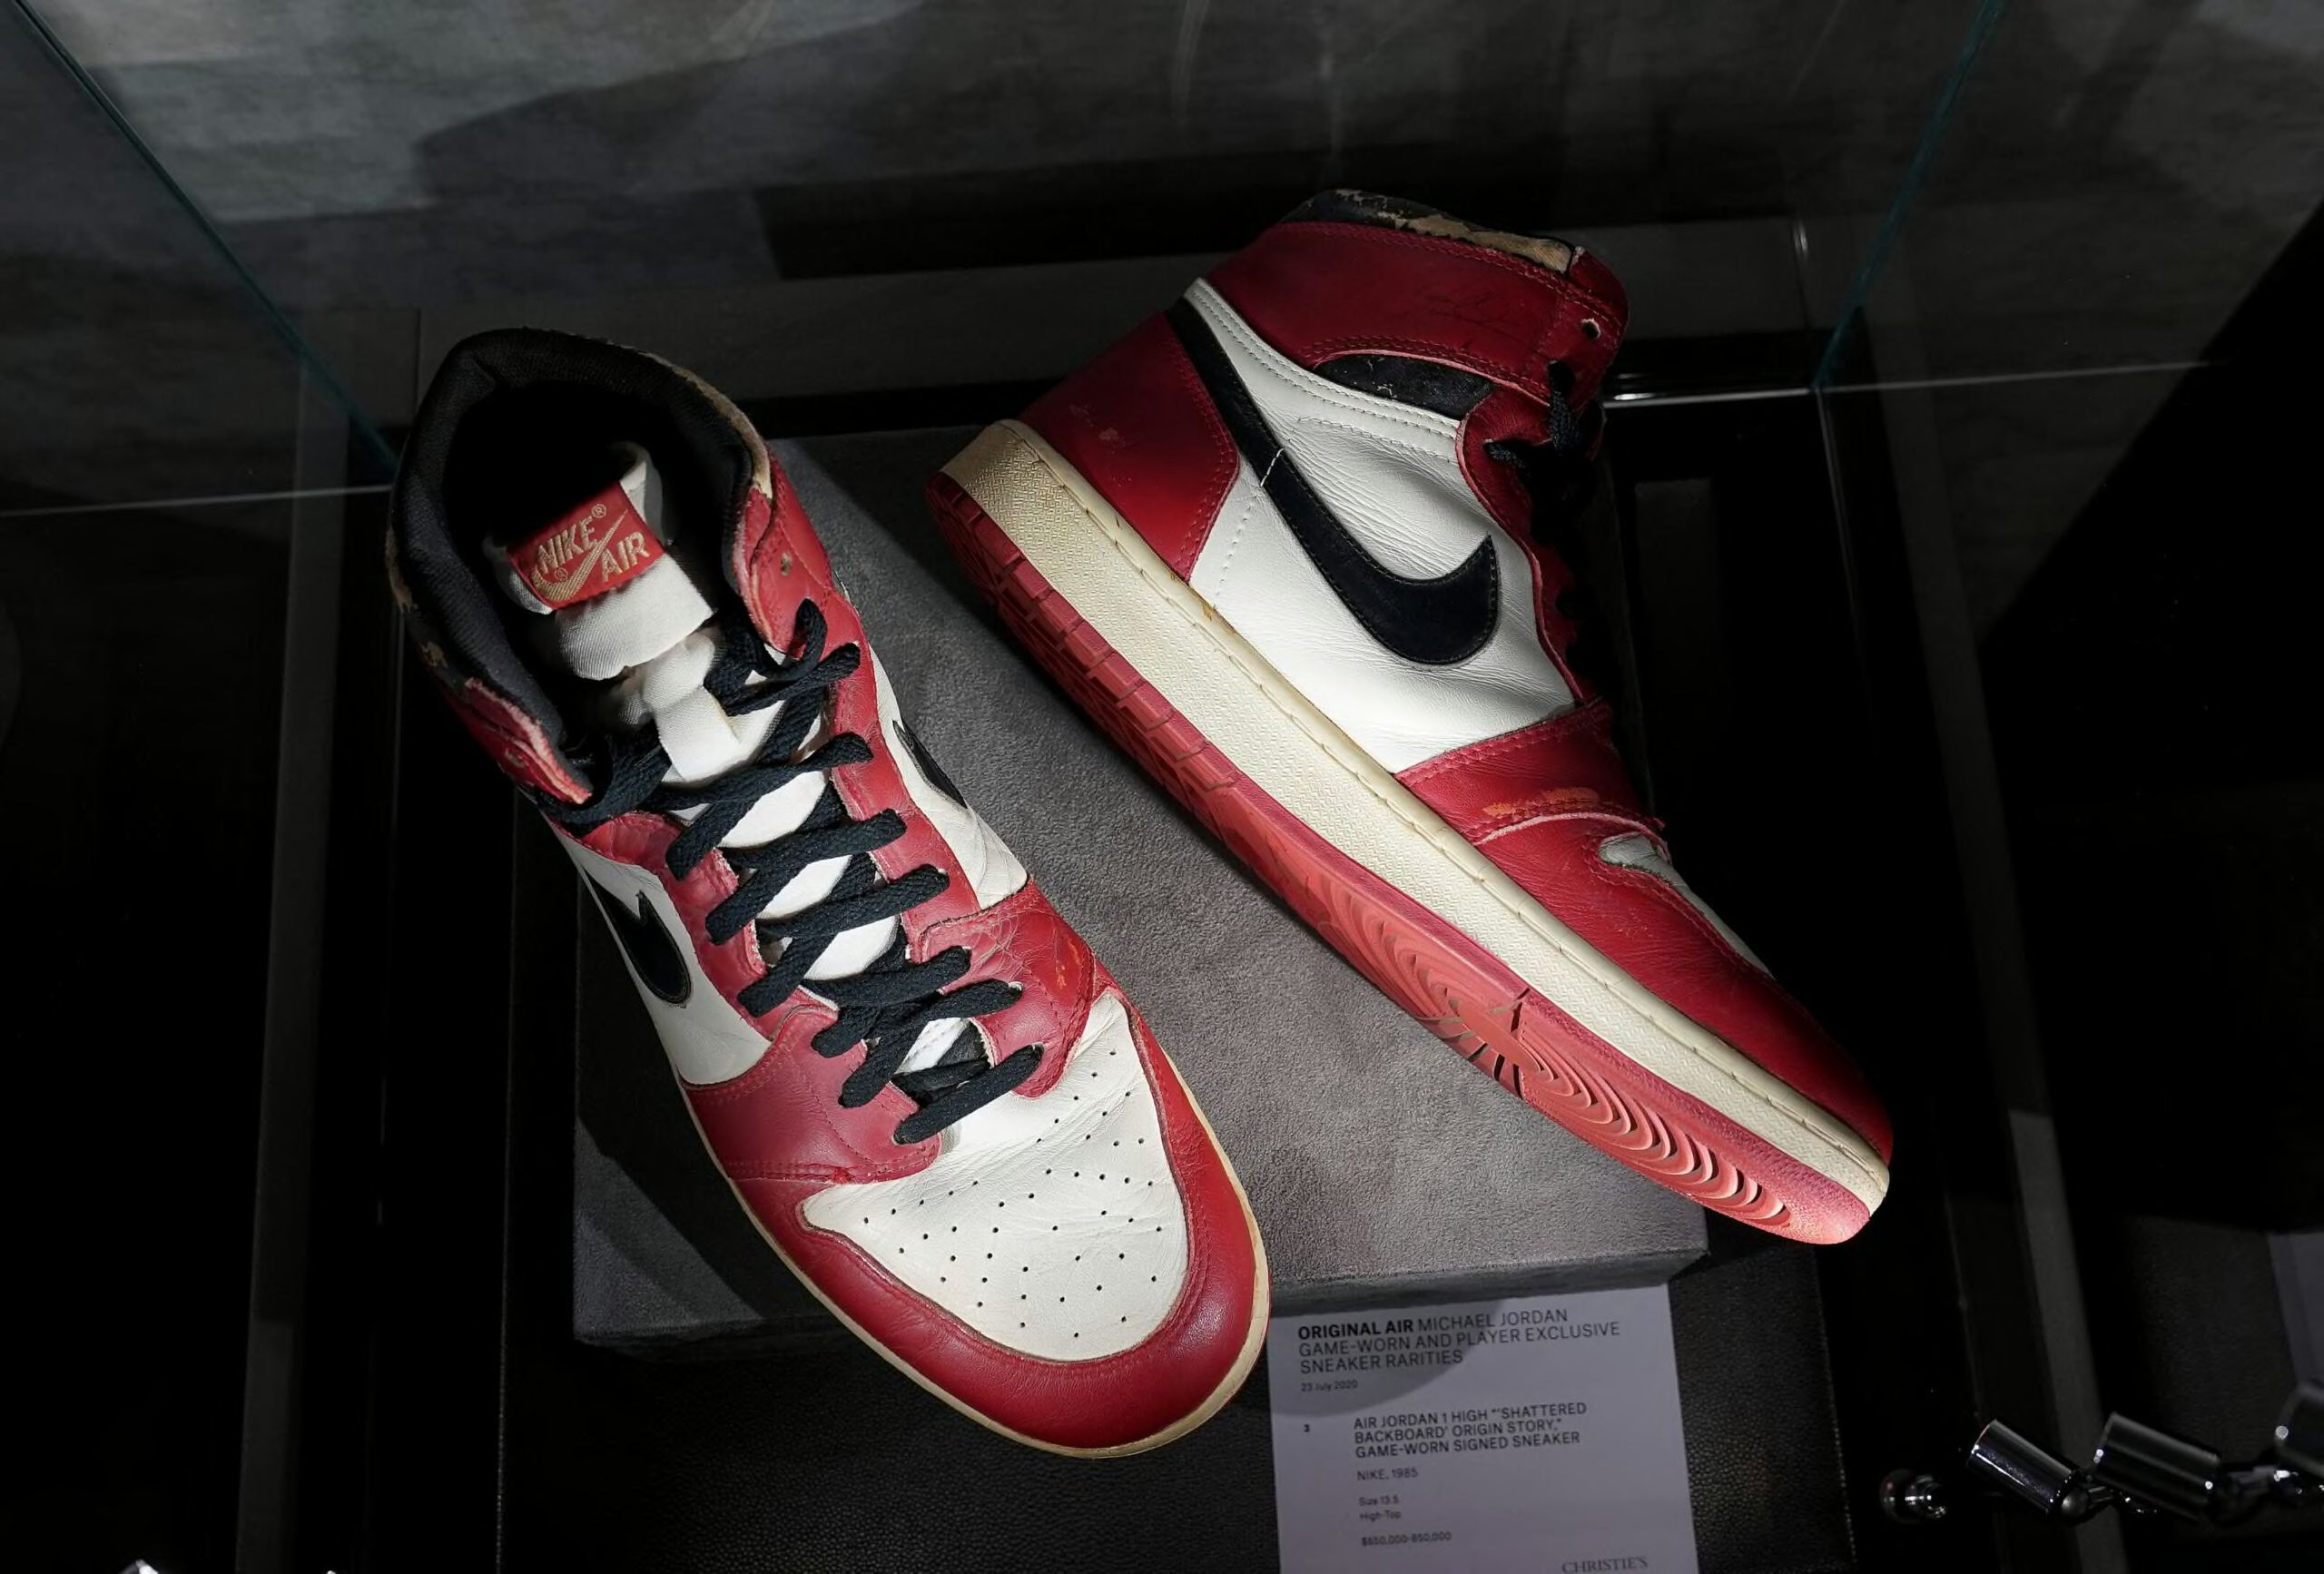 1991 Nike / Mars Blackmon Michael Jordan Spike Lee Do You Know